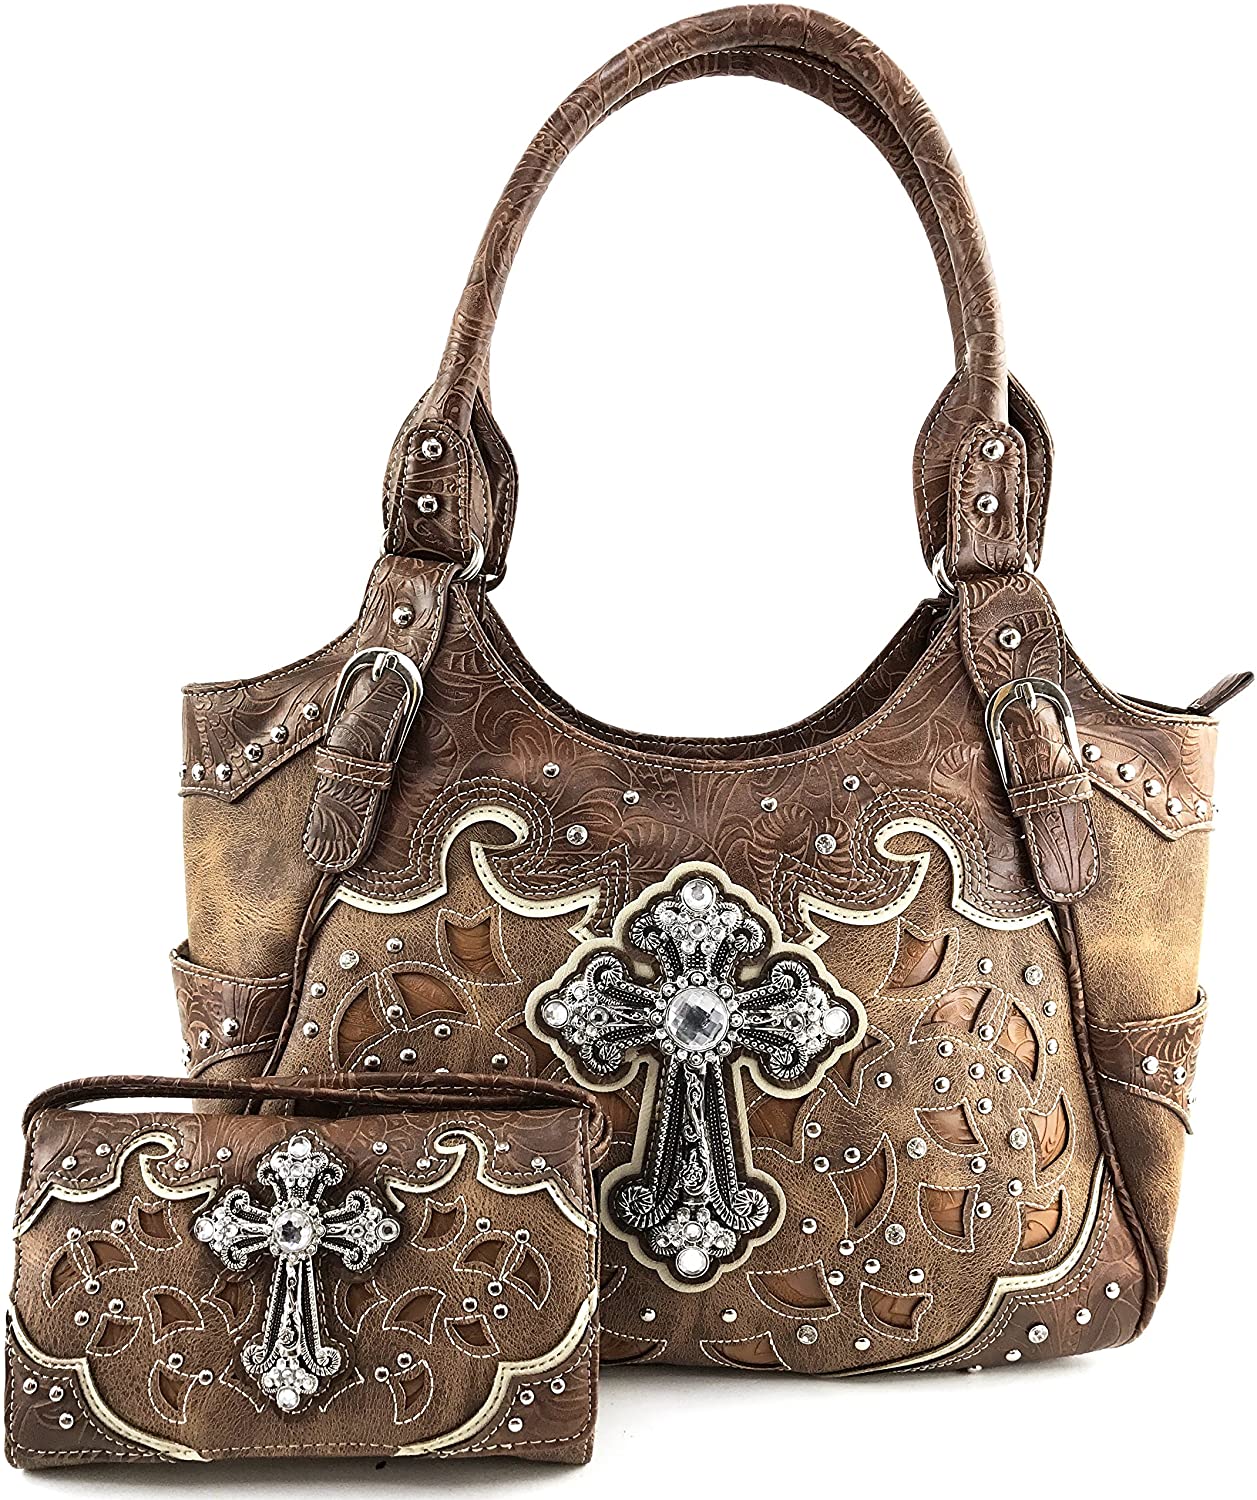 Western Bling Rhinestone Fleur De Lis Accent Purse -Camel: Handbags:  Amazon.com